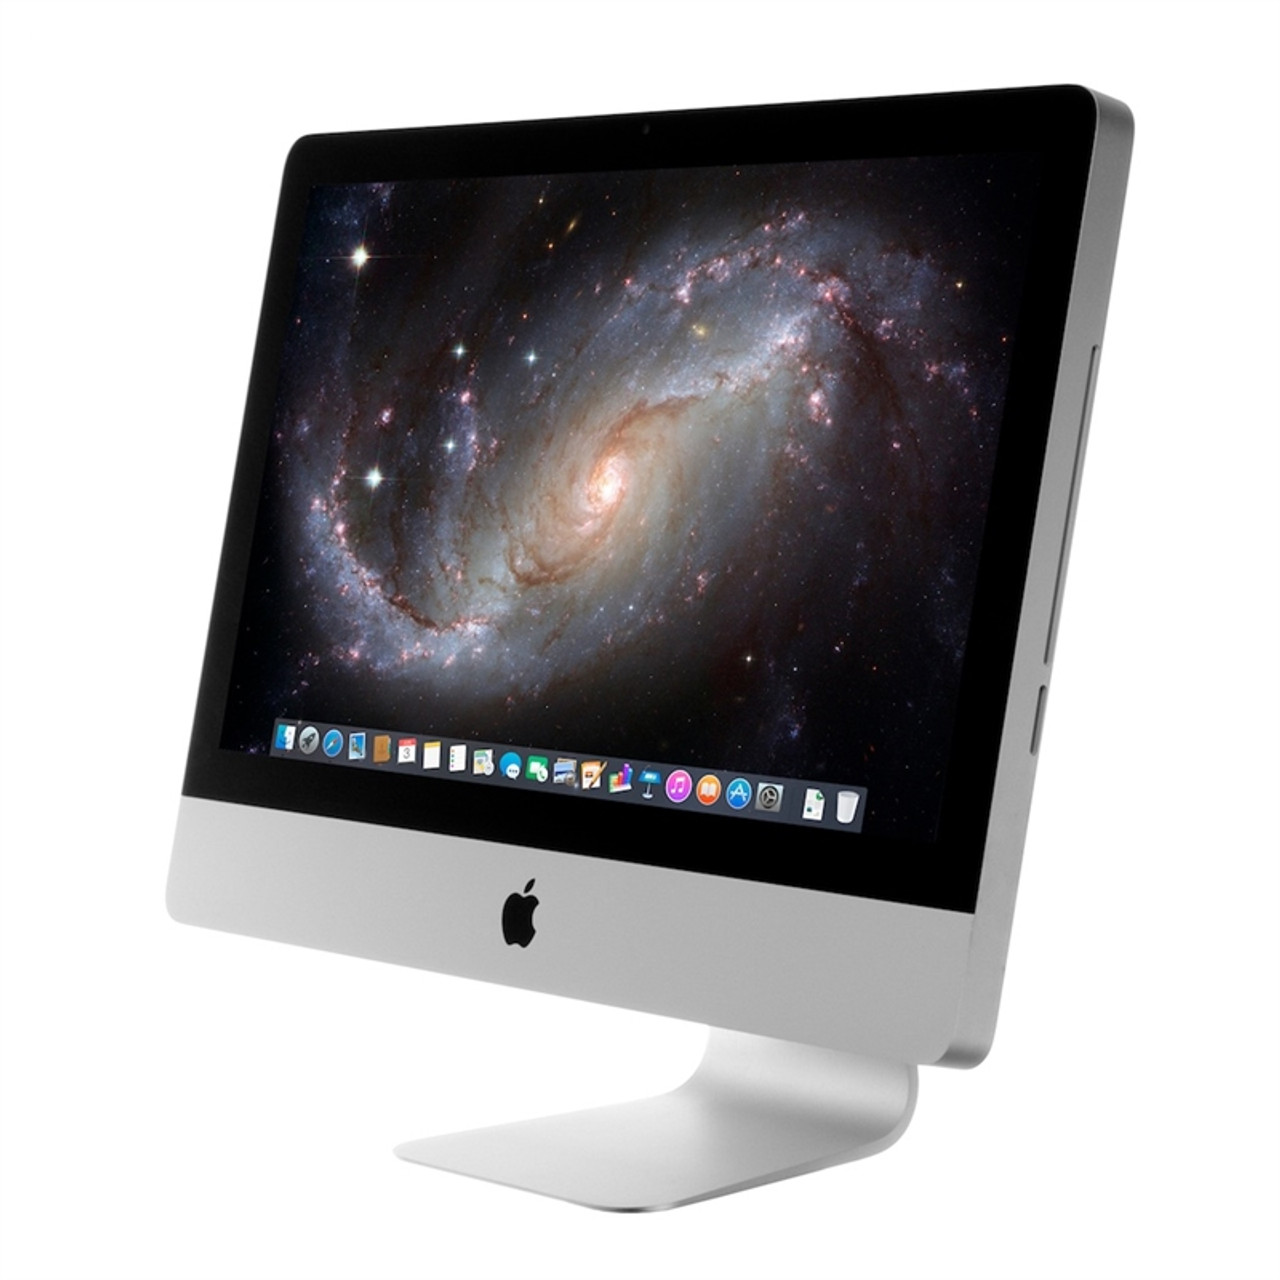 Ethernet Port*: Apple iMac 21.5-inch 2.8GHz Quad-core i7 (Mid 2011)  MC812LL/A-BTO